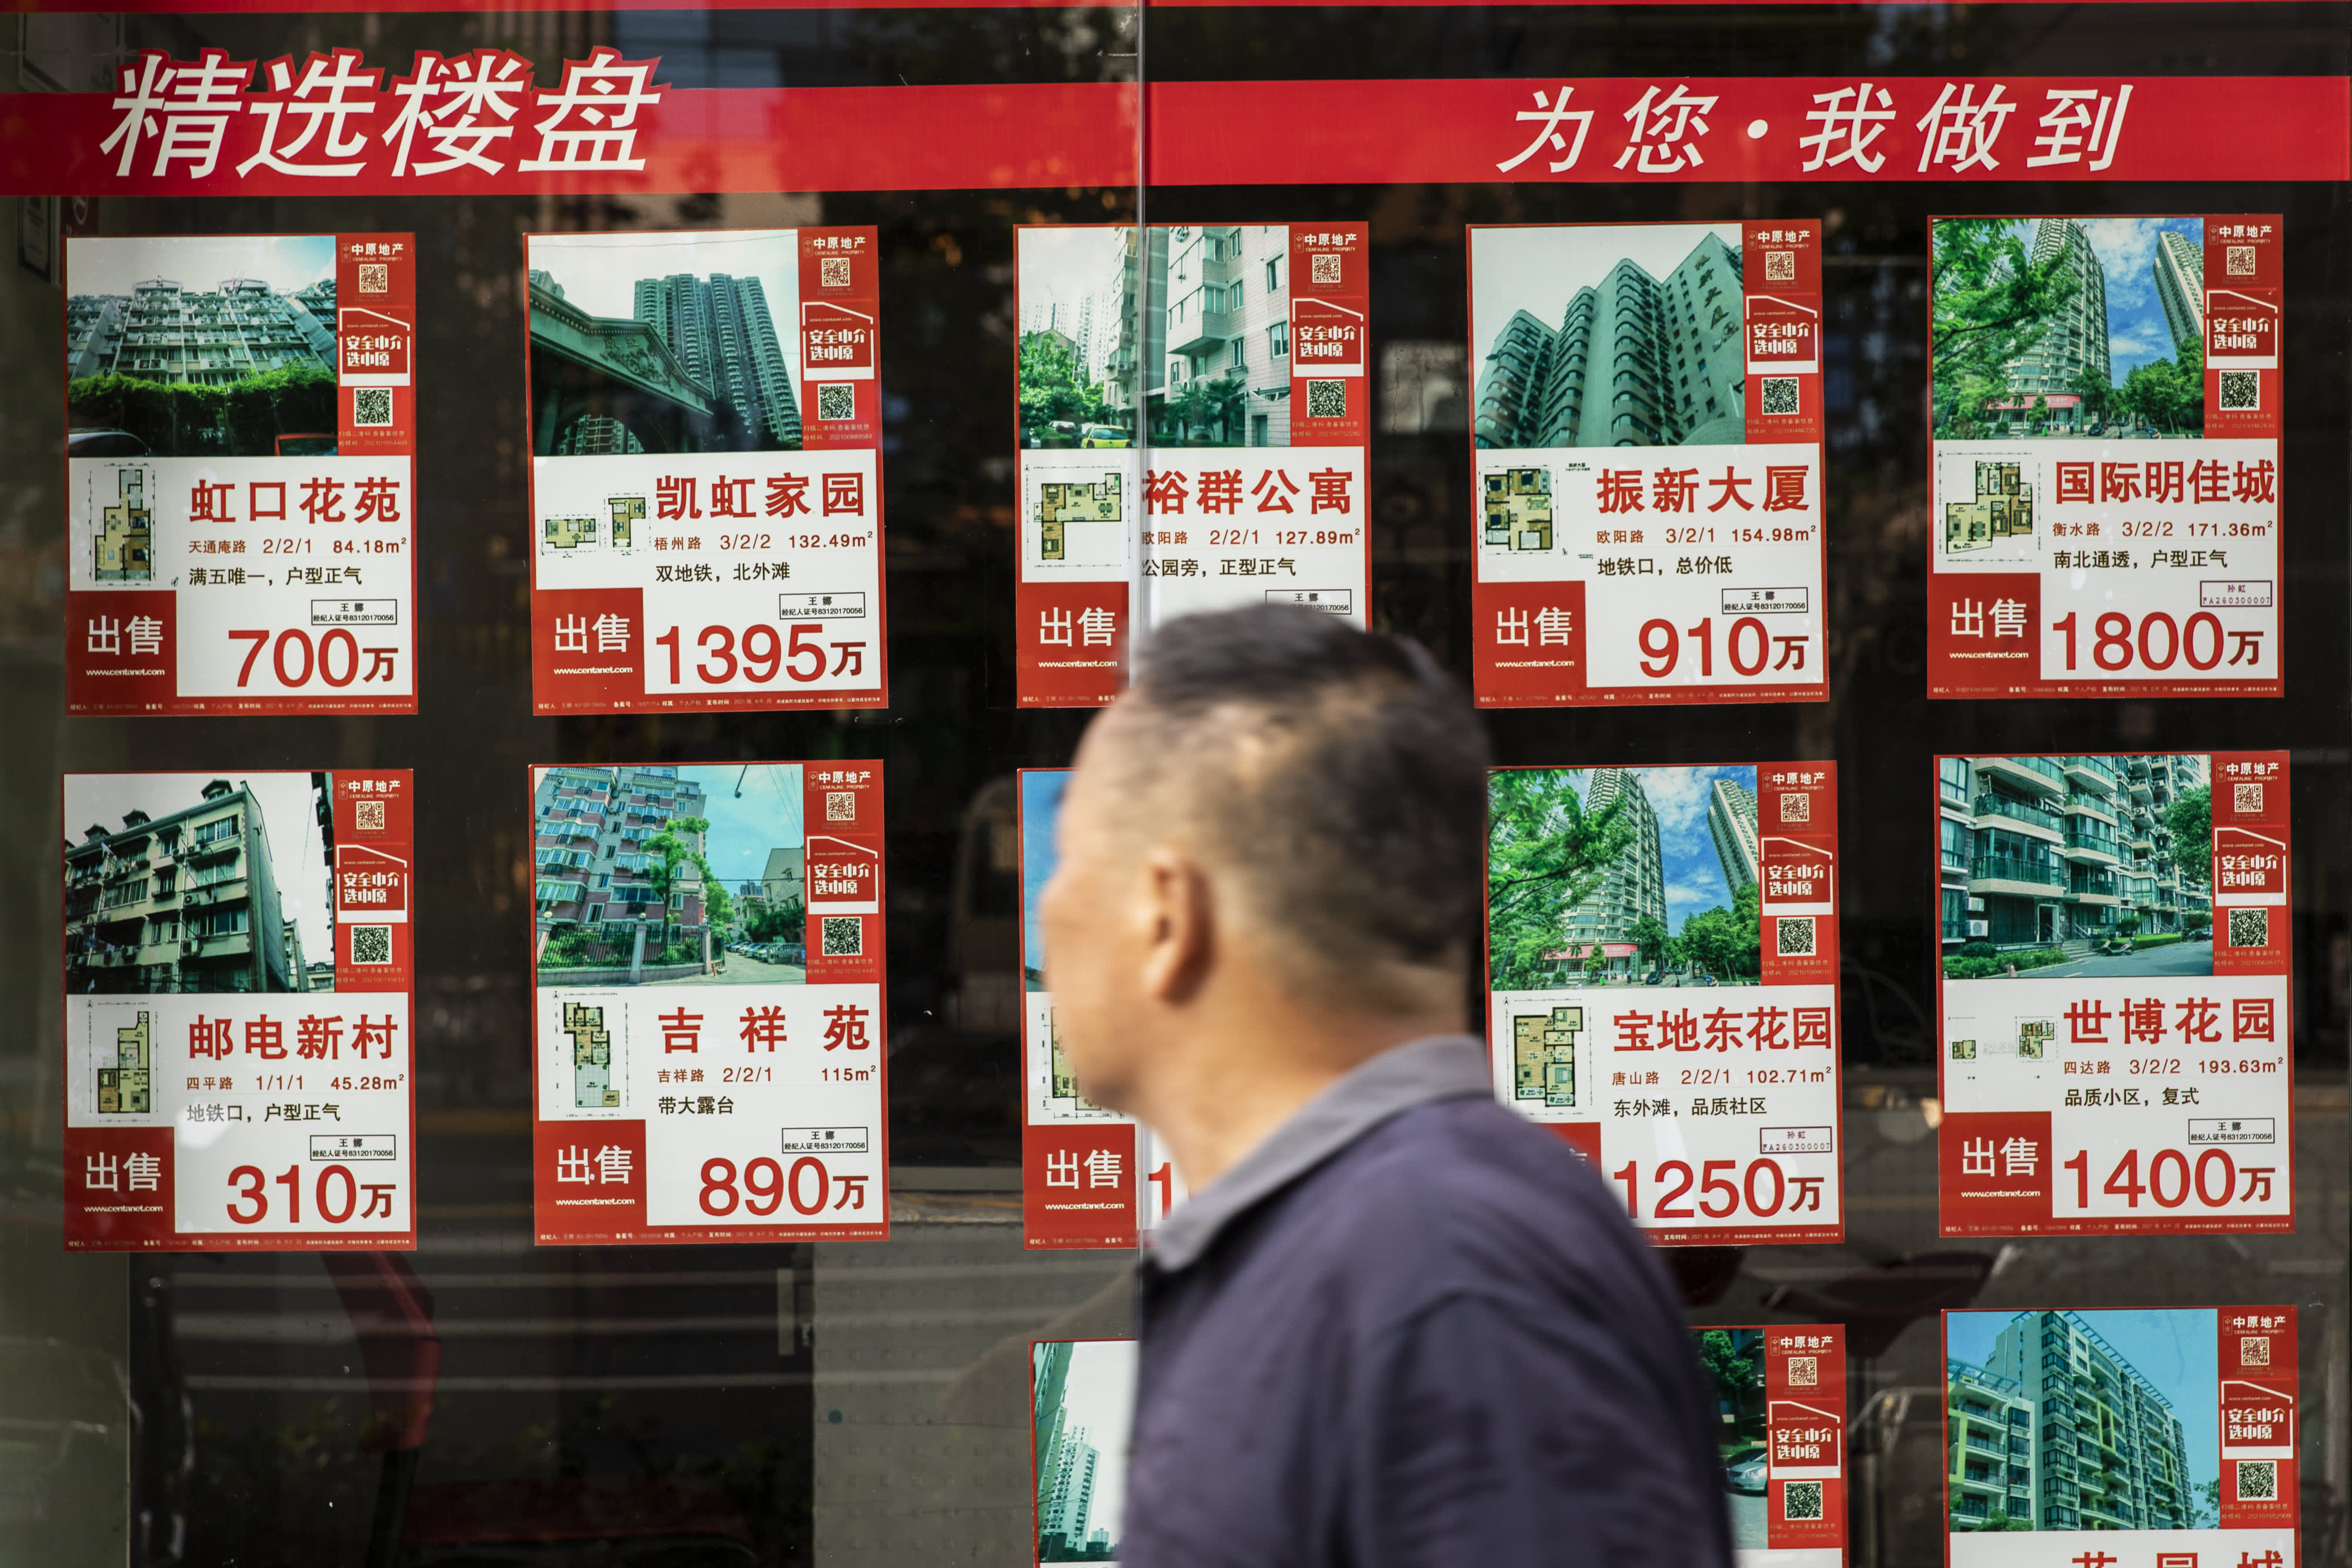 China’s real estate uncertainties persist, fueling market panic